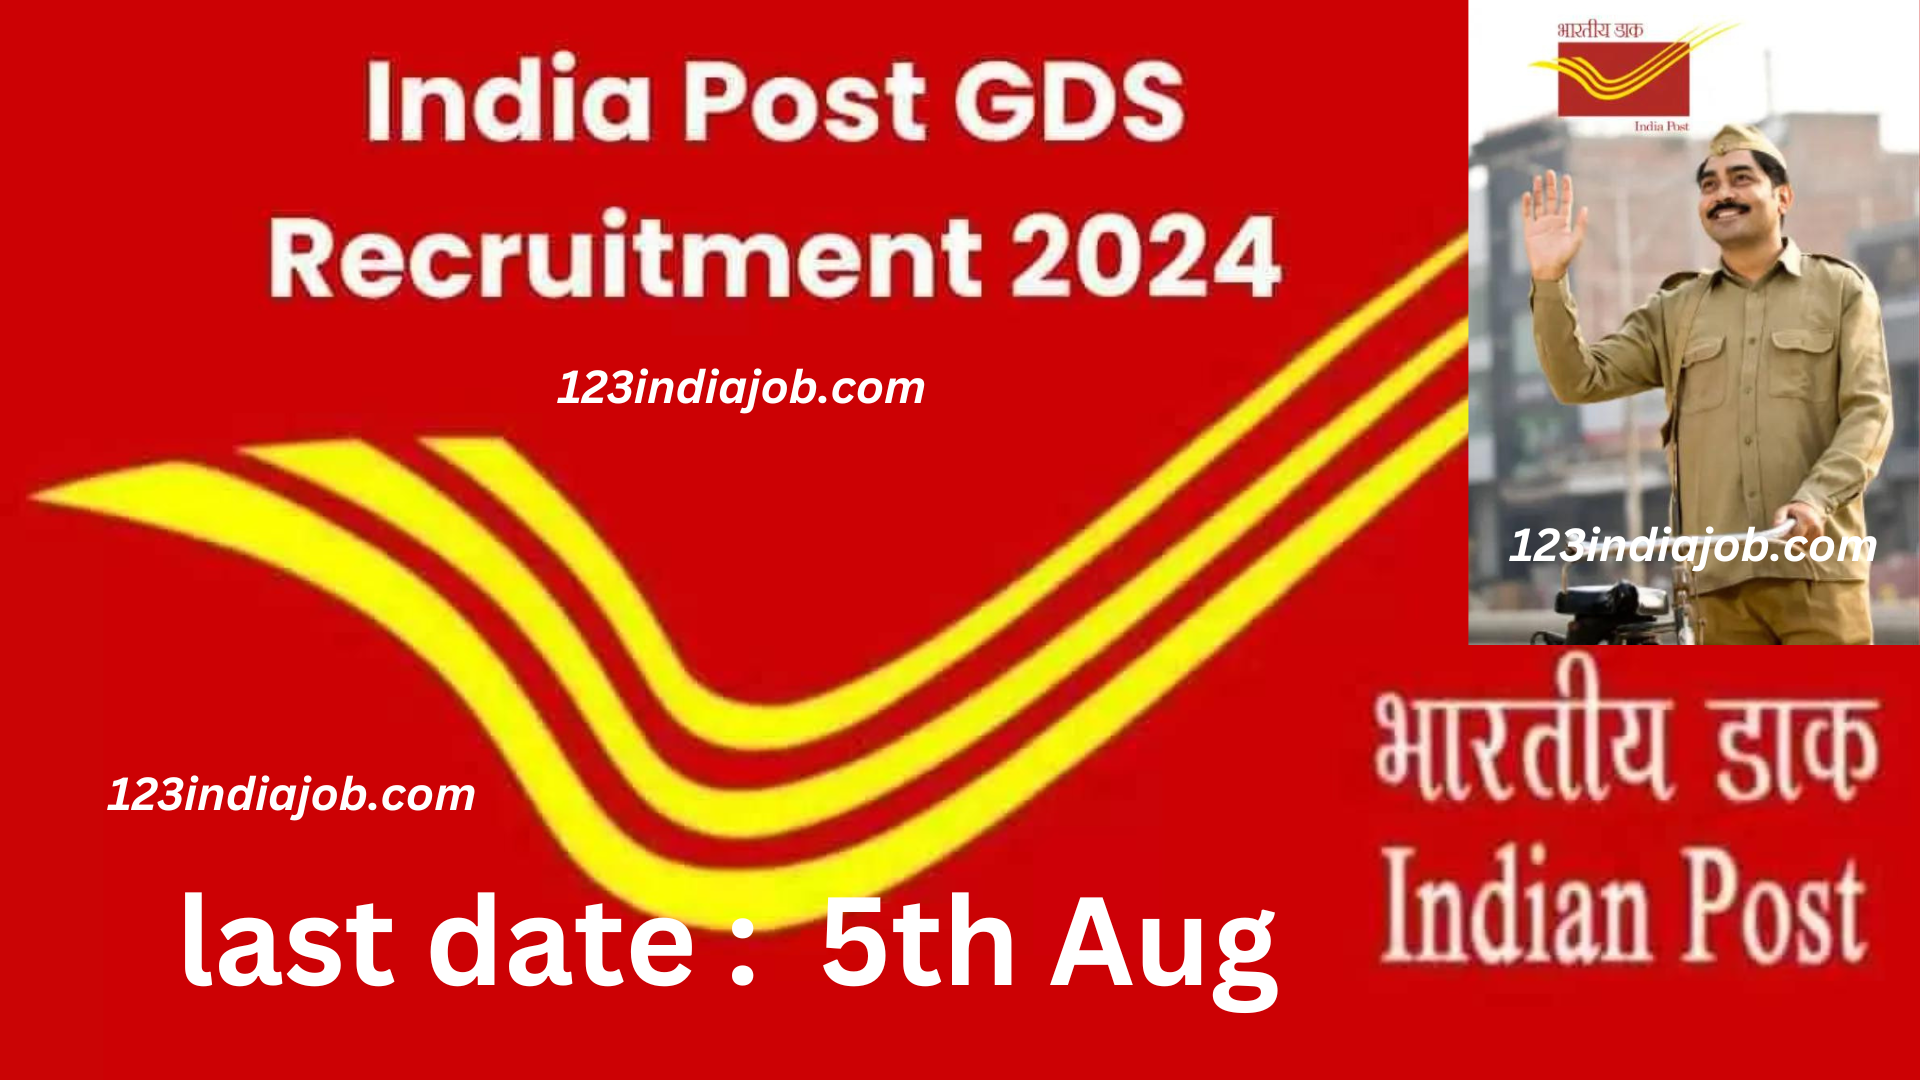 India Post GDS Recruitment